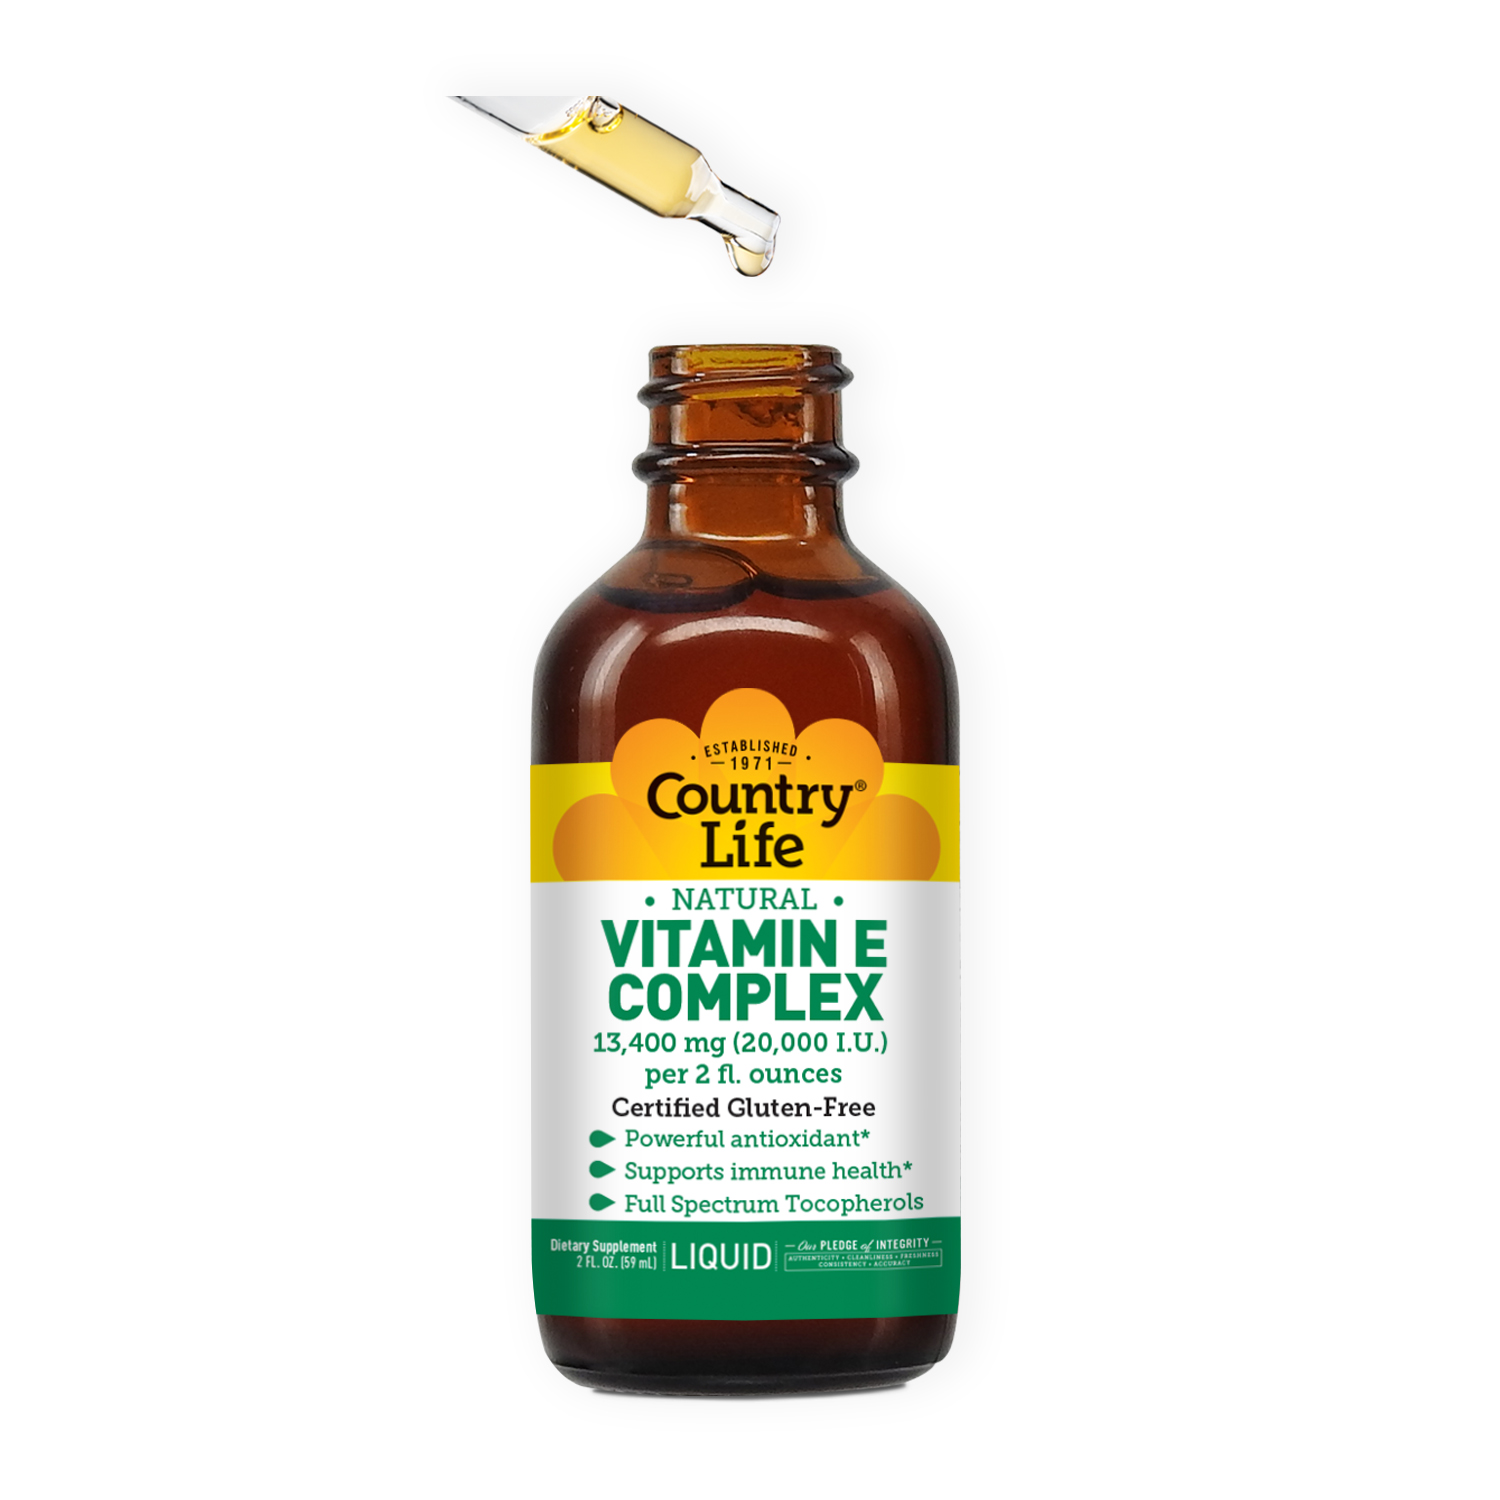 Natural Vitamin E Complex 20,000 I.U.